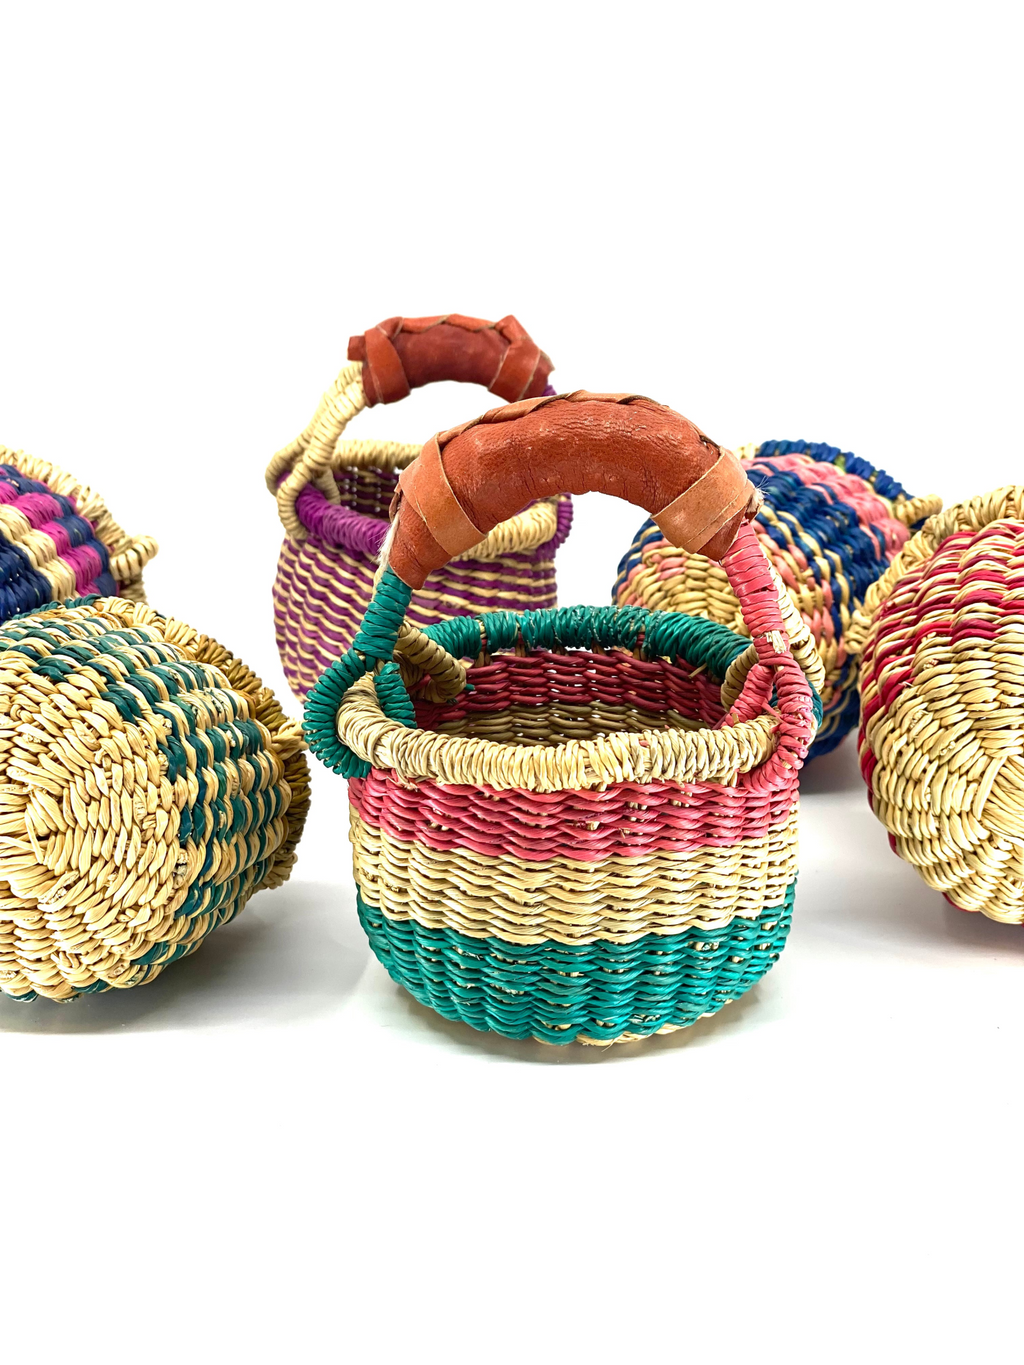 Mini Bolga Baskets, 3” - 4”